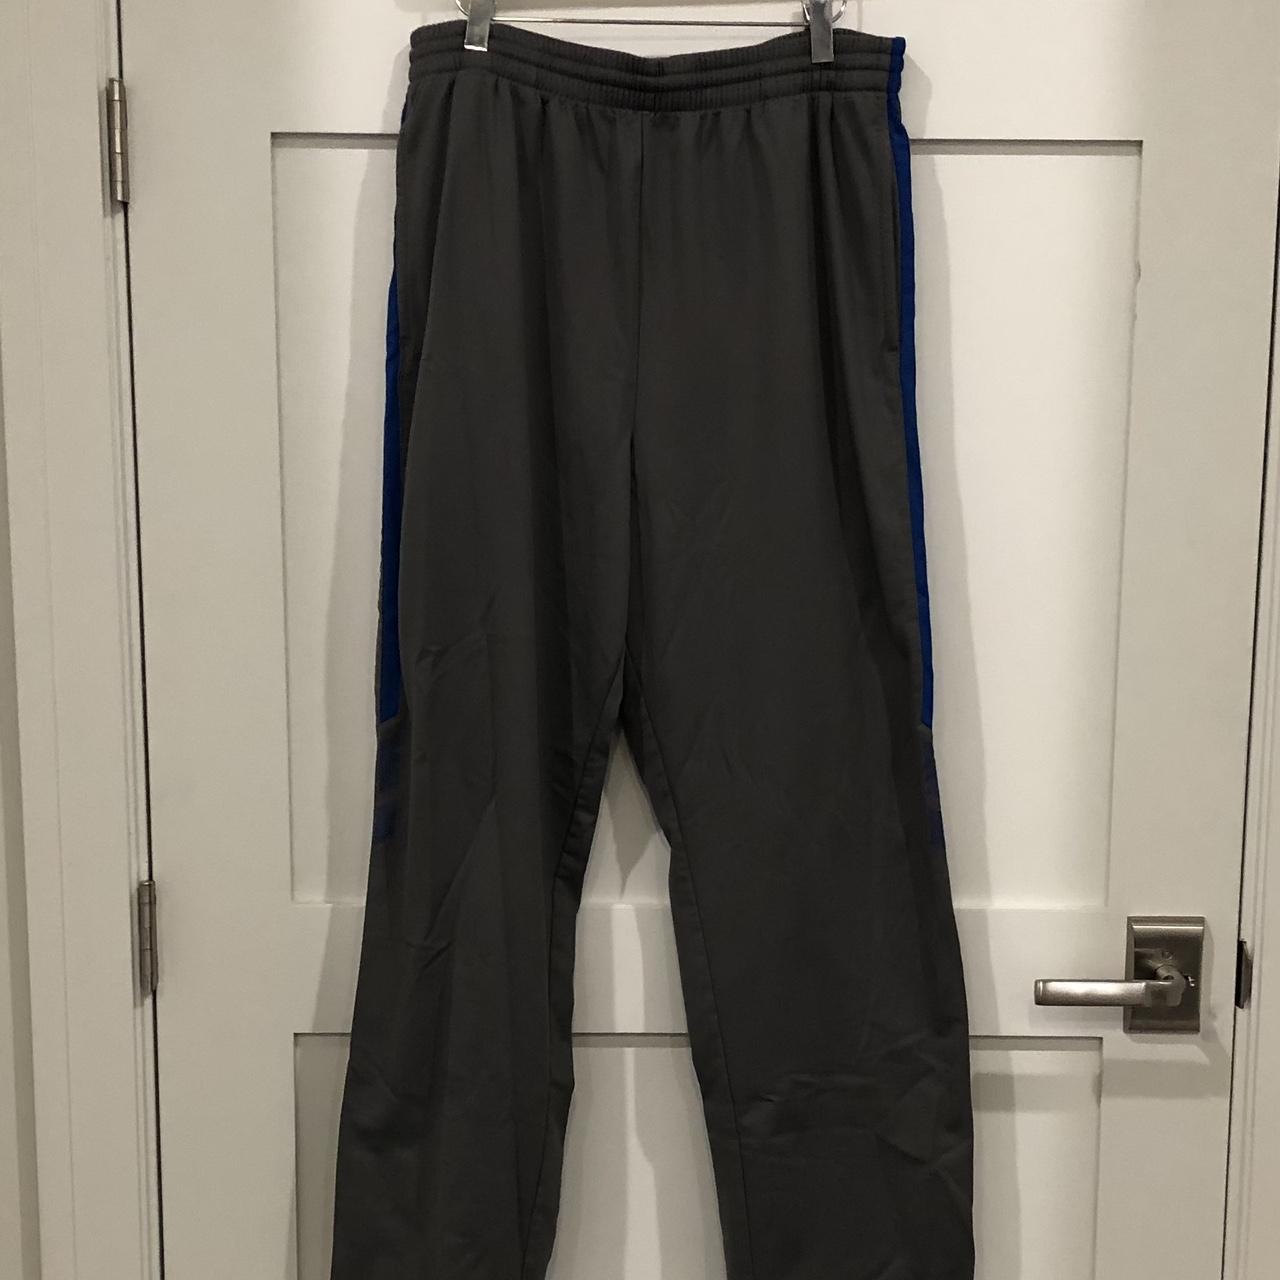 tek gear dark blue workout pants - Depop